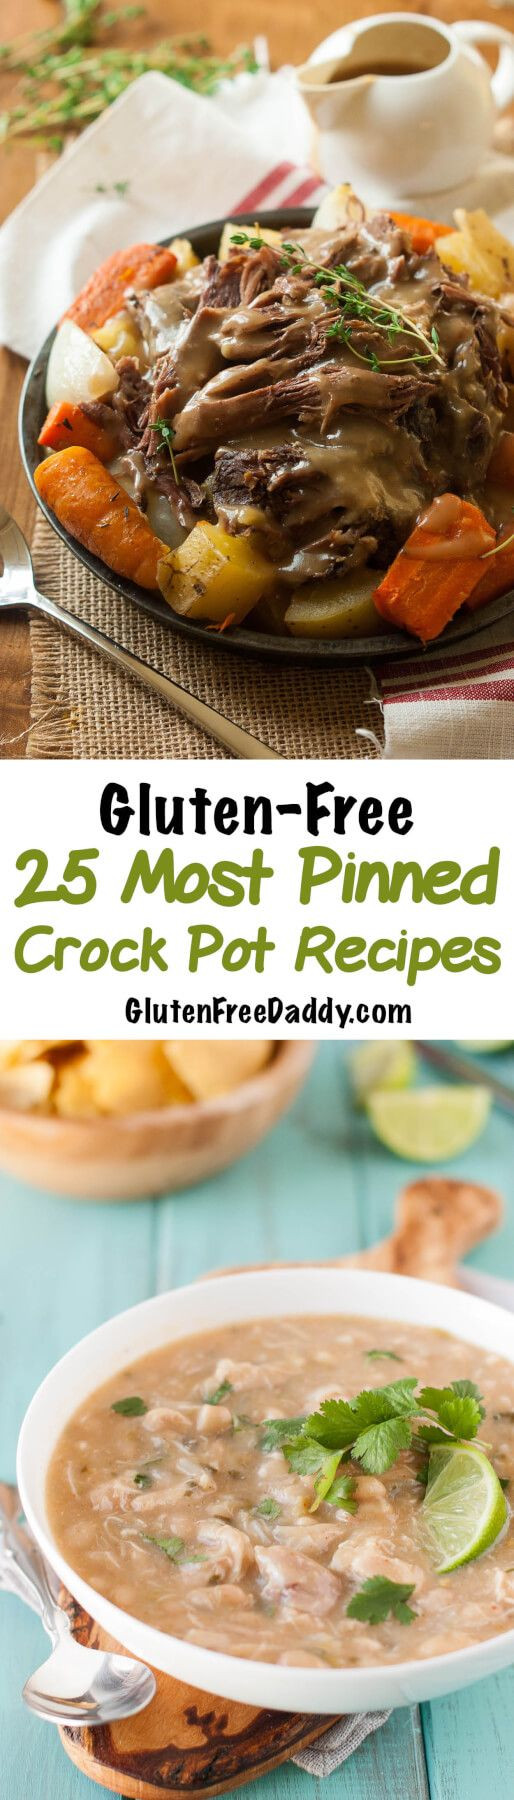 Gluten Free Dairy Free Crock Pot Recipes Best 25 Gluten free ideas on Pinterest